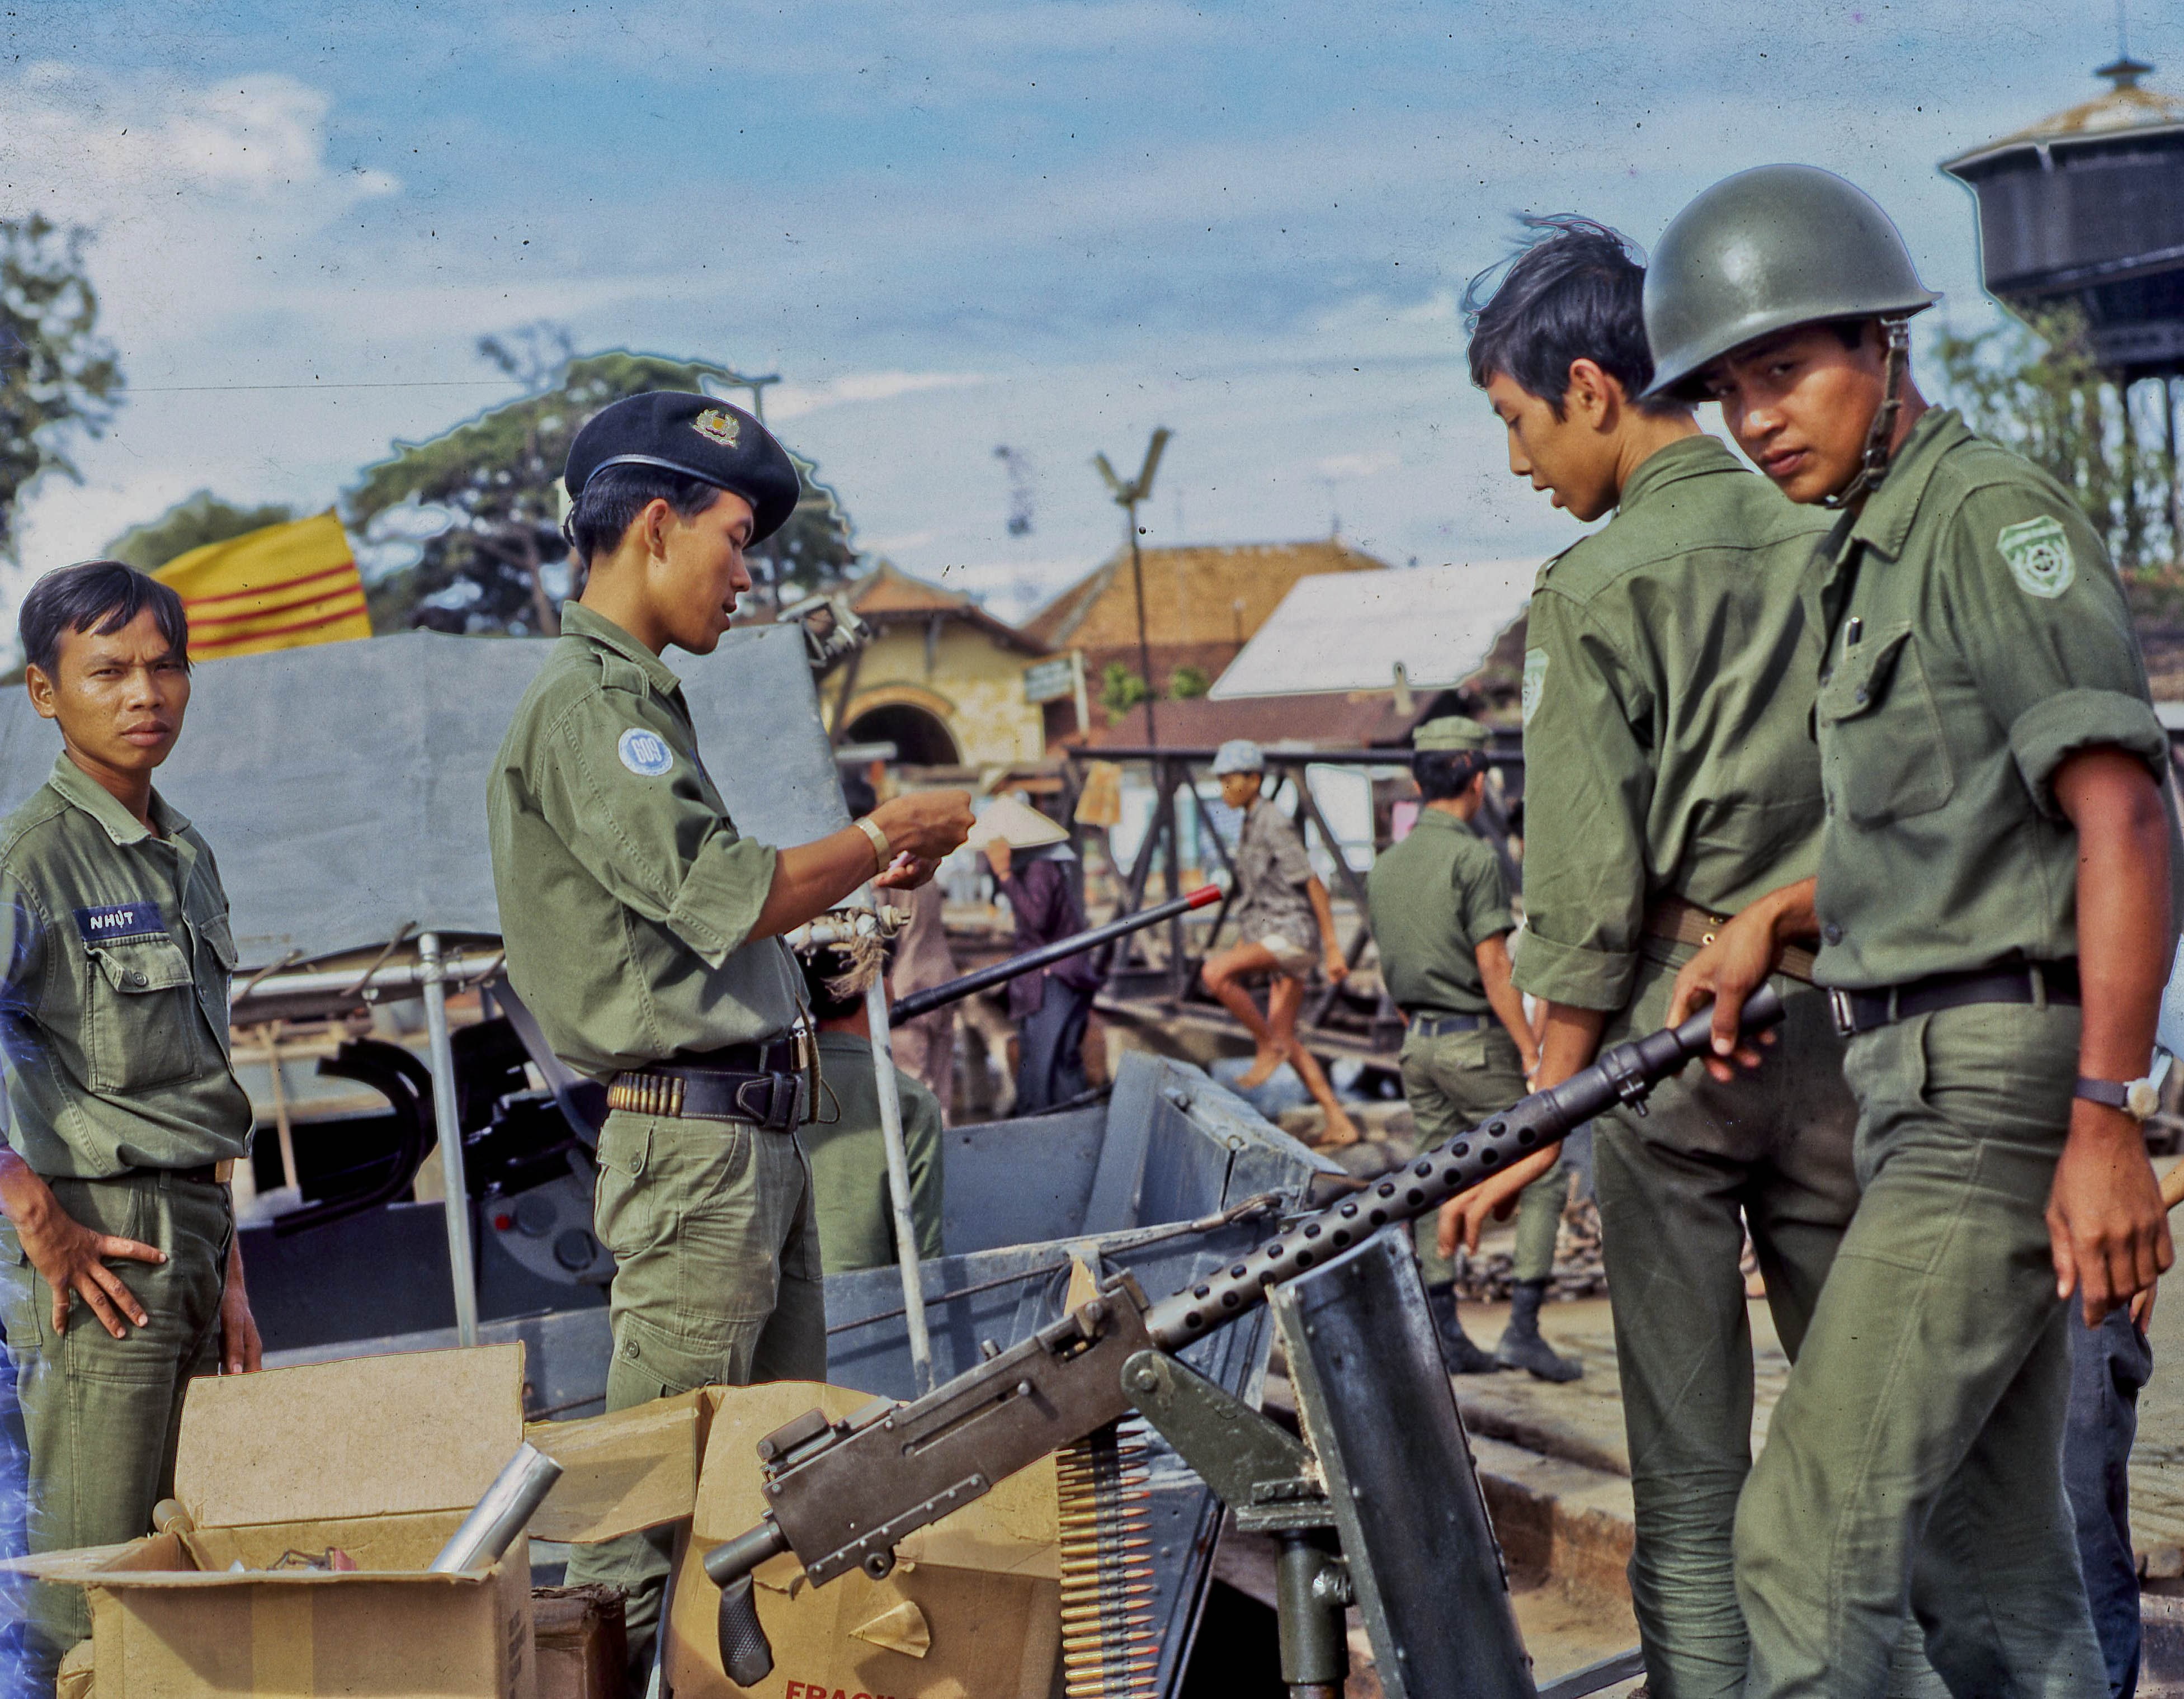 vietnam war, group of people, day, men, transportation, standing